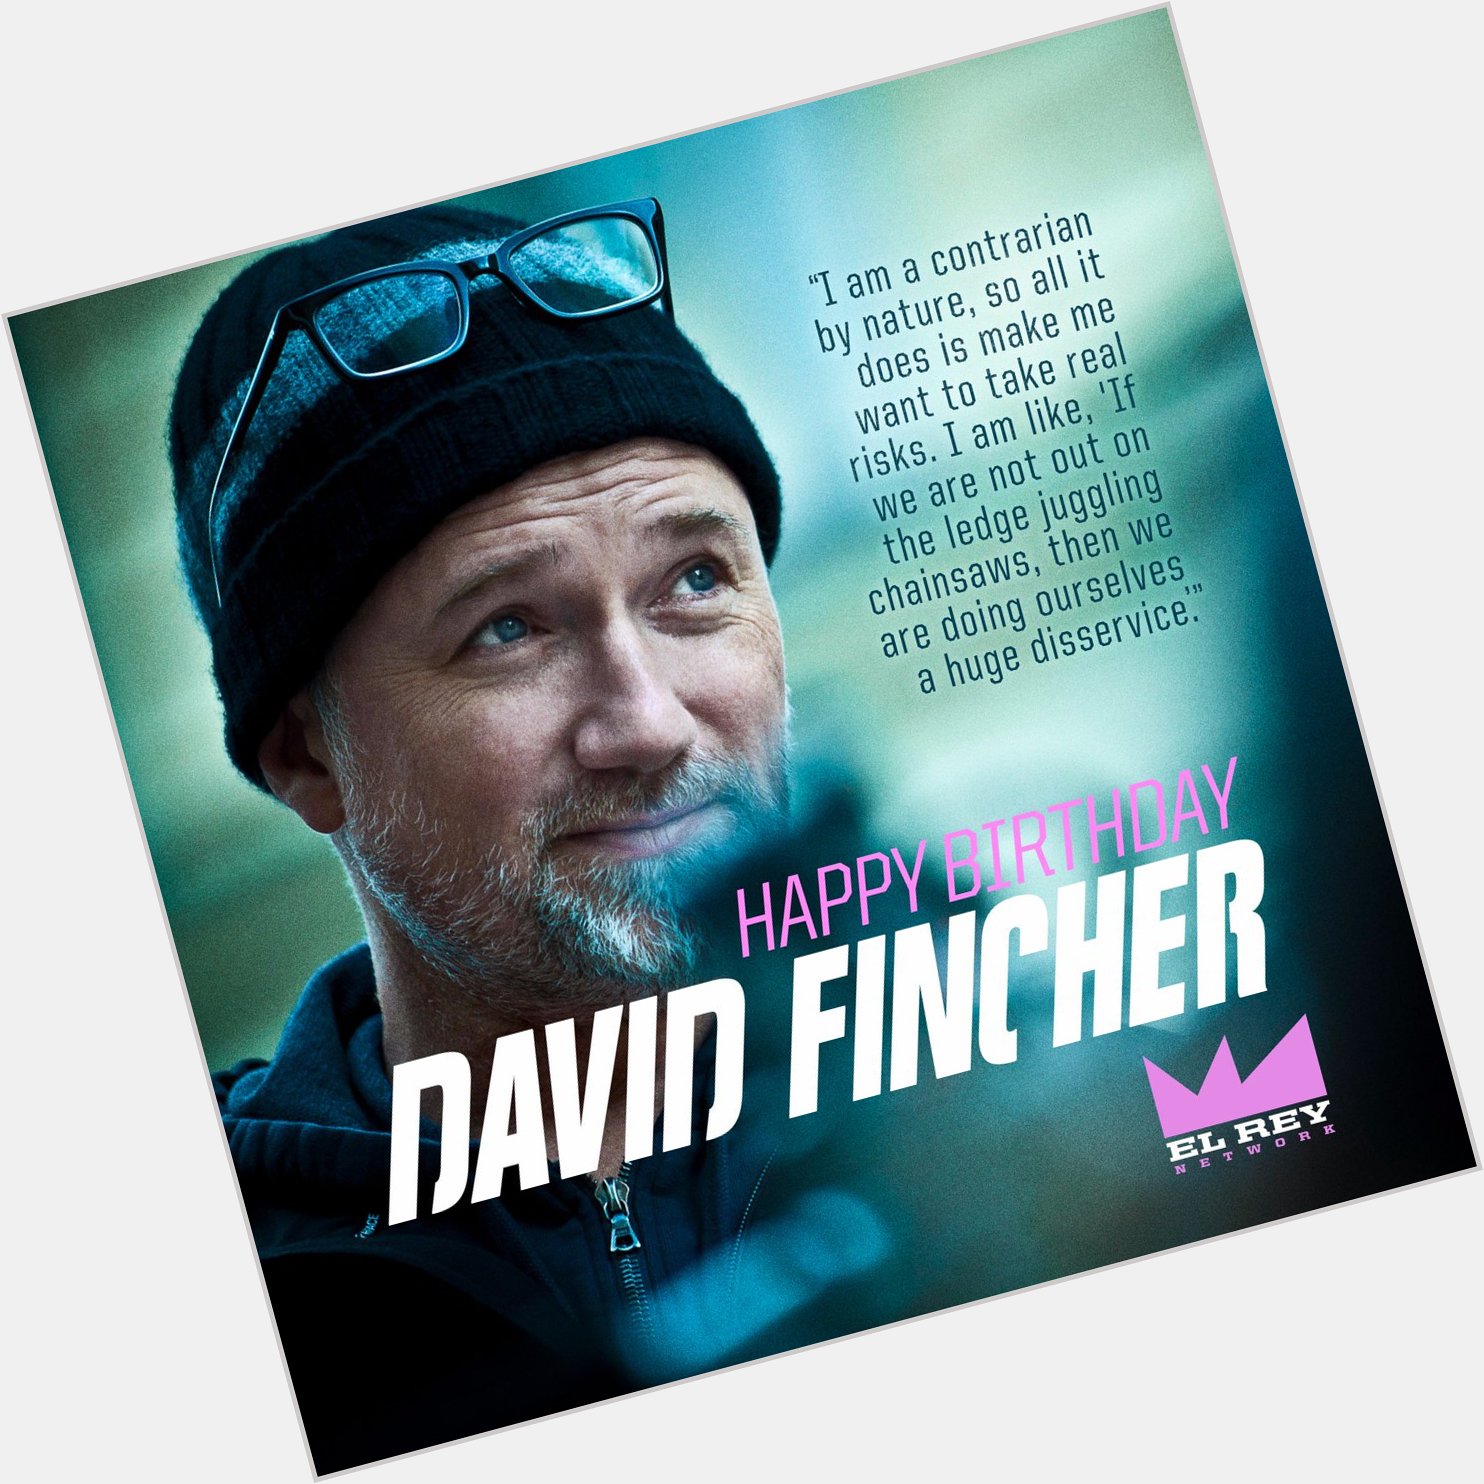 Happy Birthday David Fincher from 